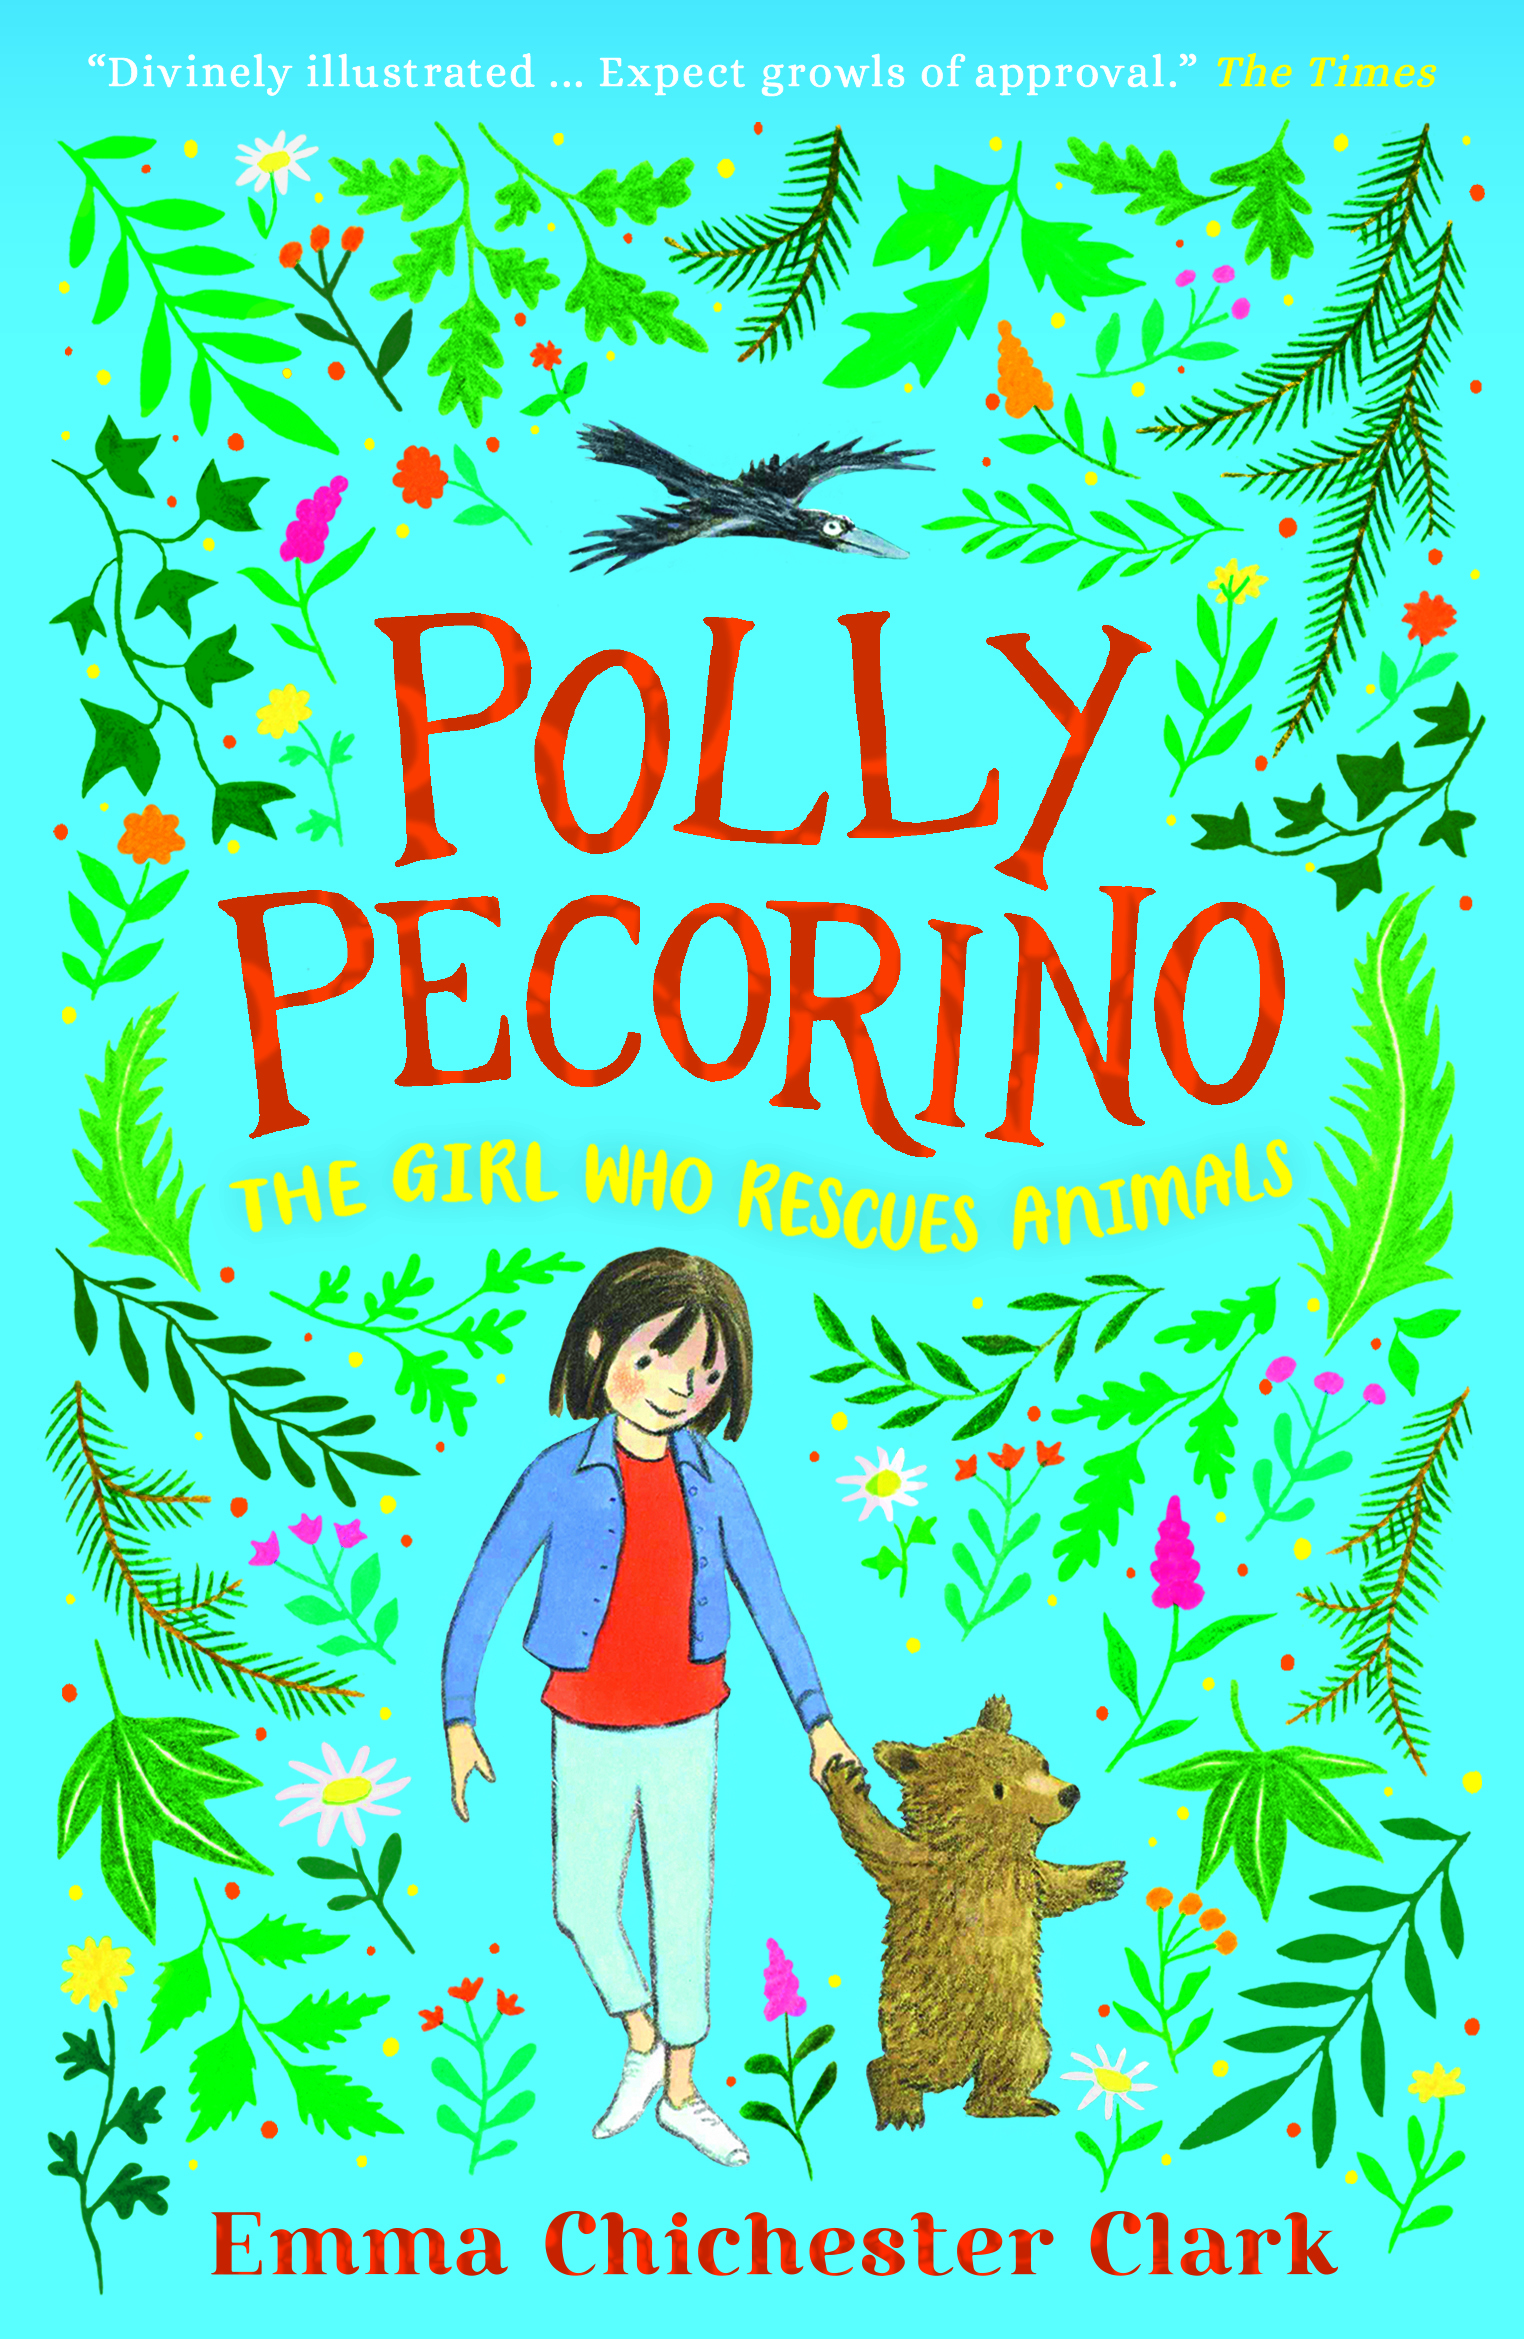 Polly-Pecorino-The-Girl-Who-Rescues-Animals